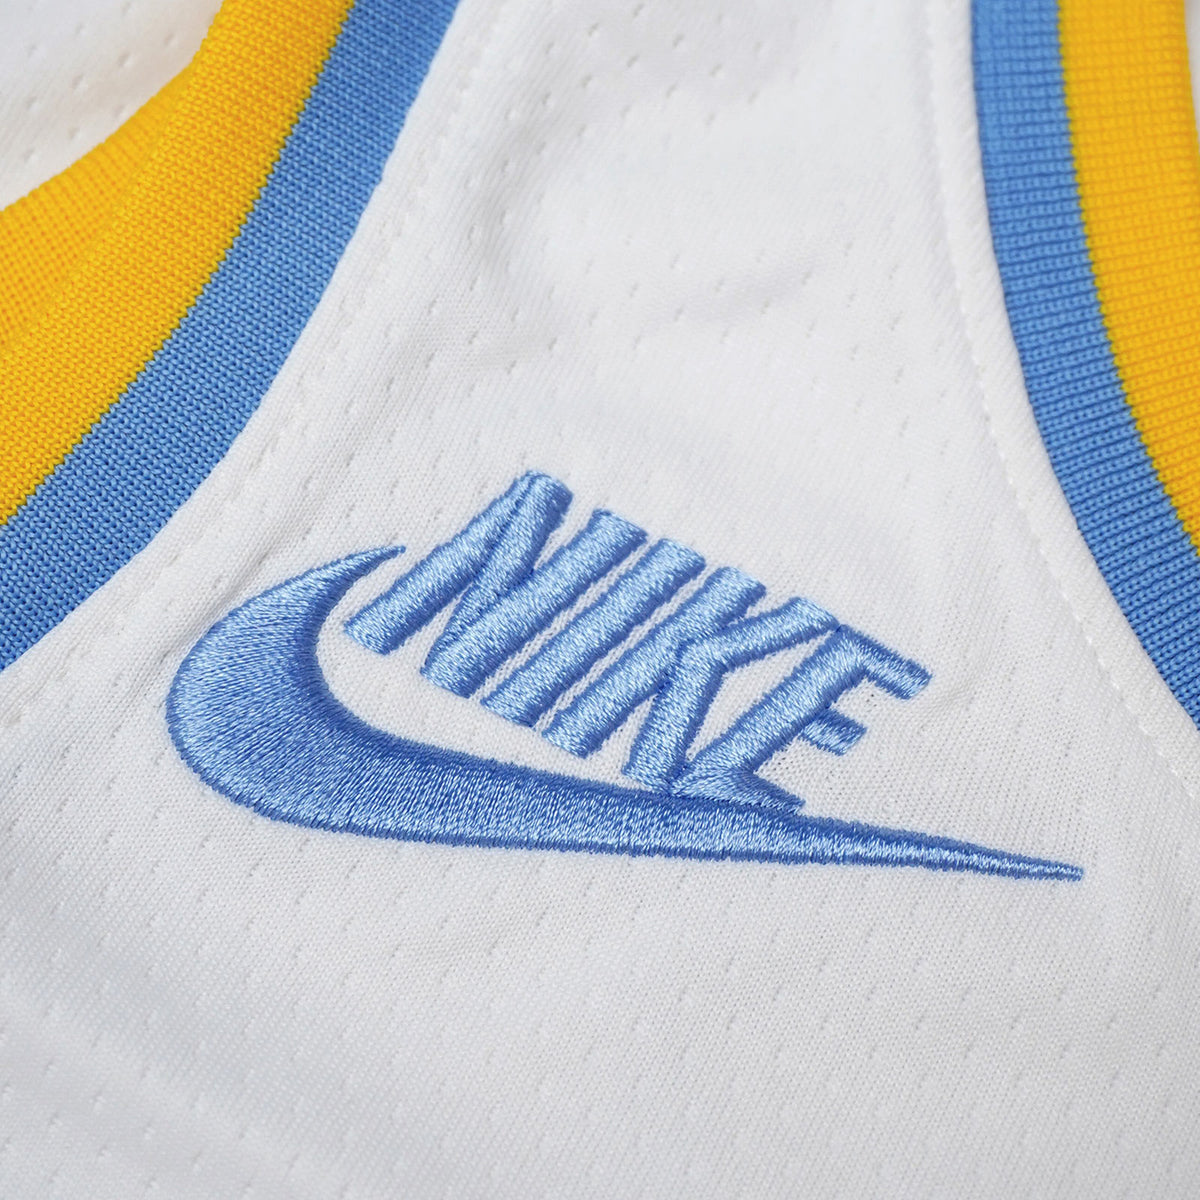 Nike NBA Lakers Classic Edition LeBron James Swingman jersey |  sneakersclubsg